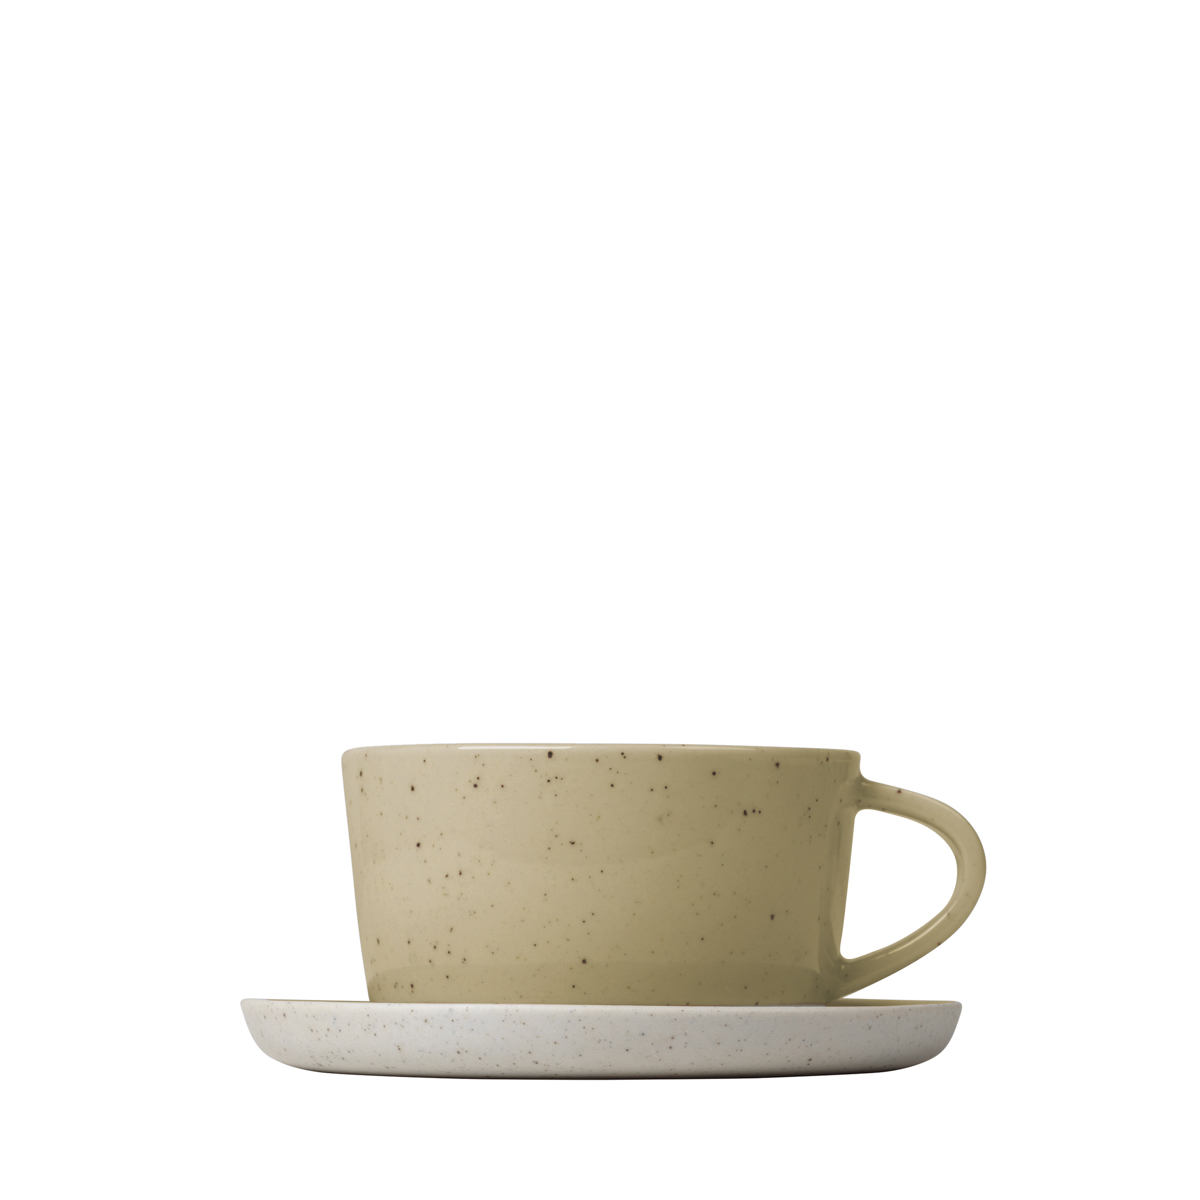 Set 2 Kaffeetassen, 4 tlg. -SABLO- Savannah 150 ml, Ø 8,5 cm, Ø 12 cm. Material: Keramik. Von Blomus.